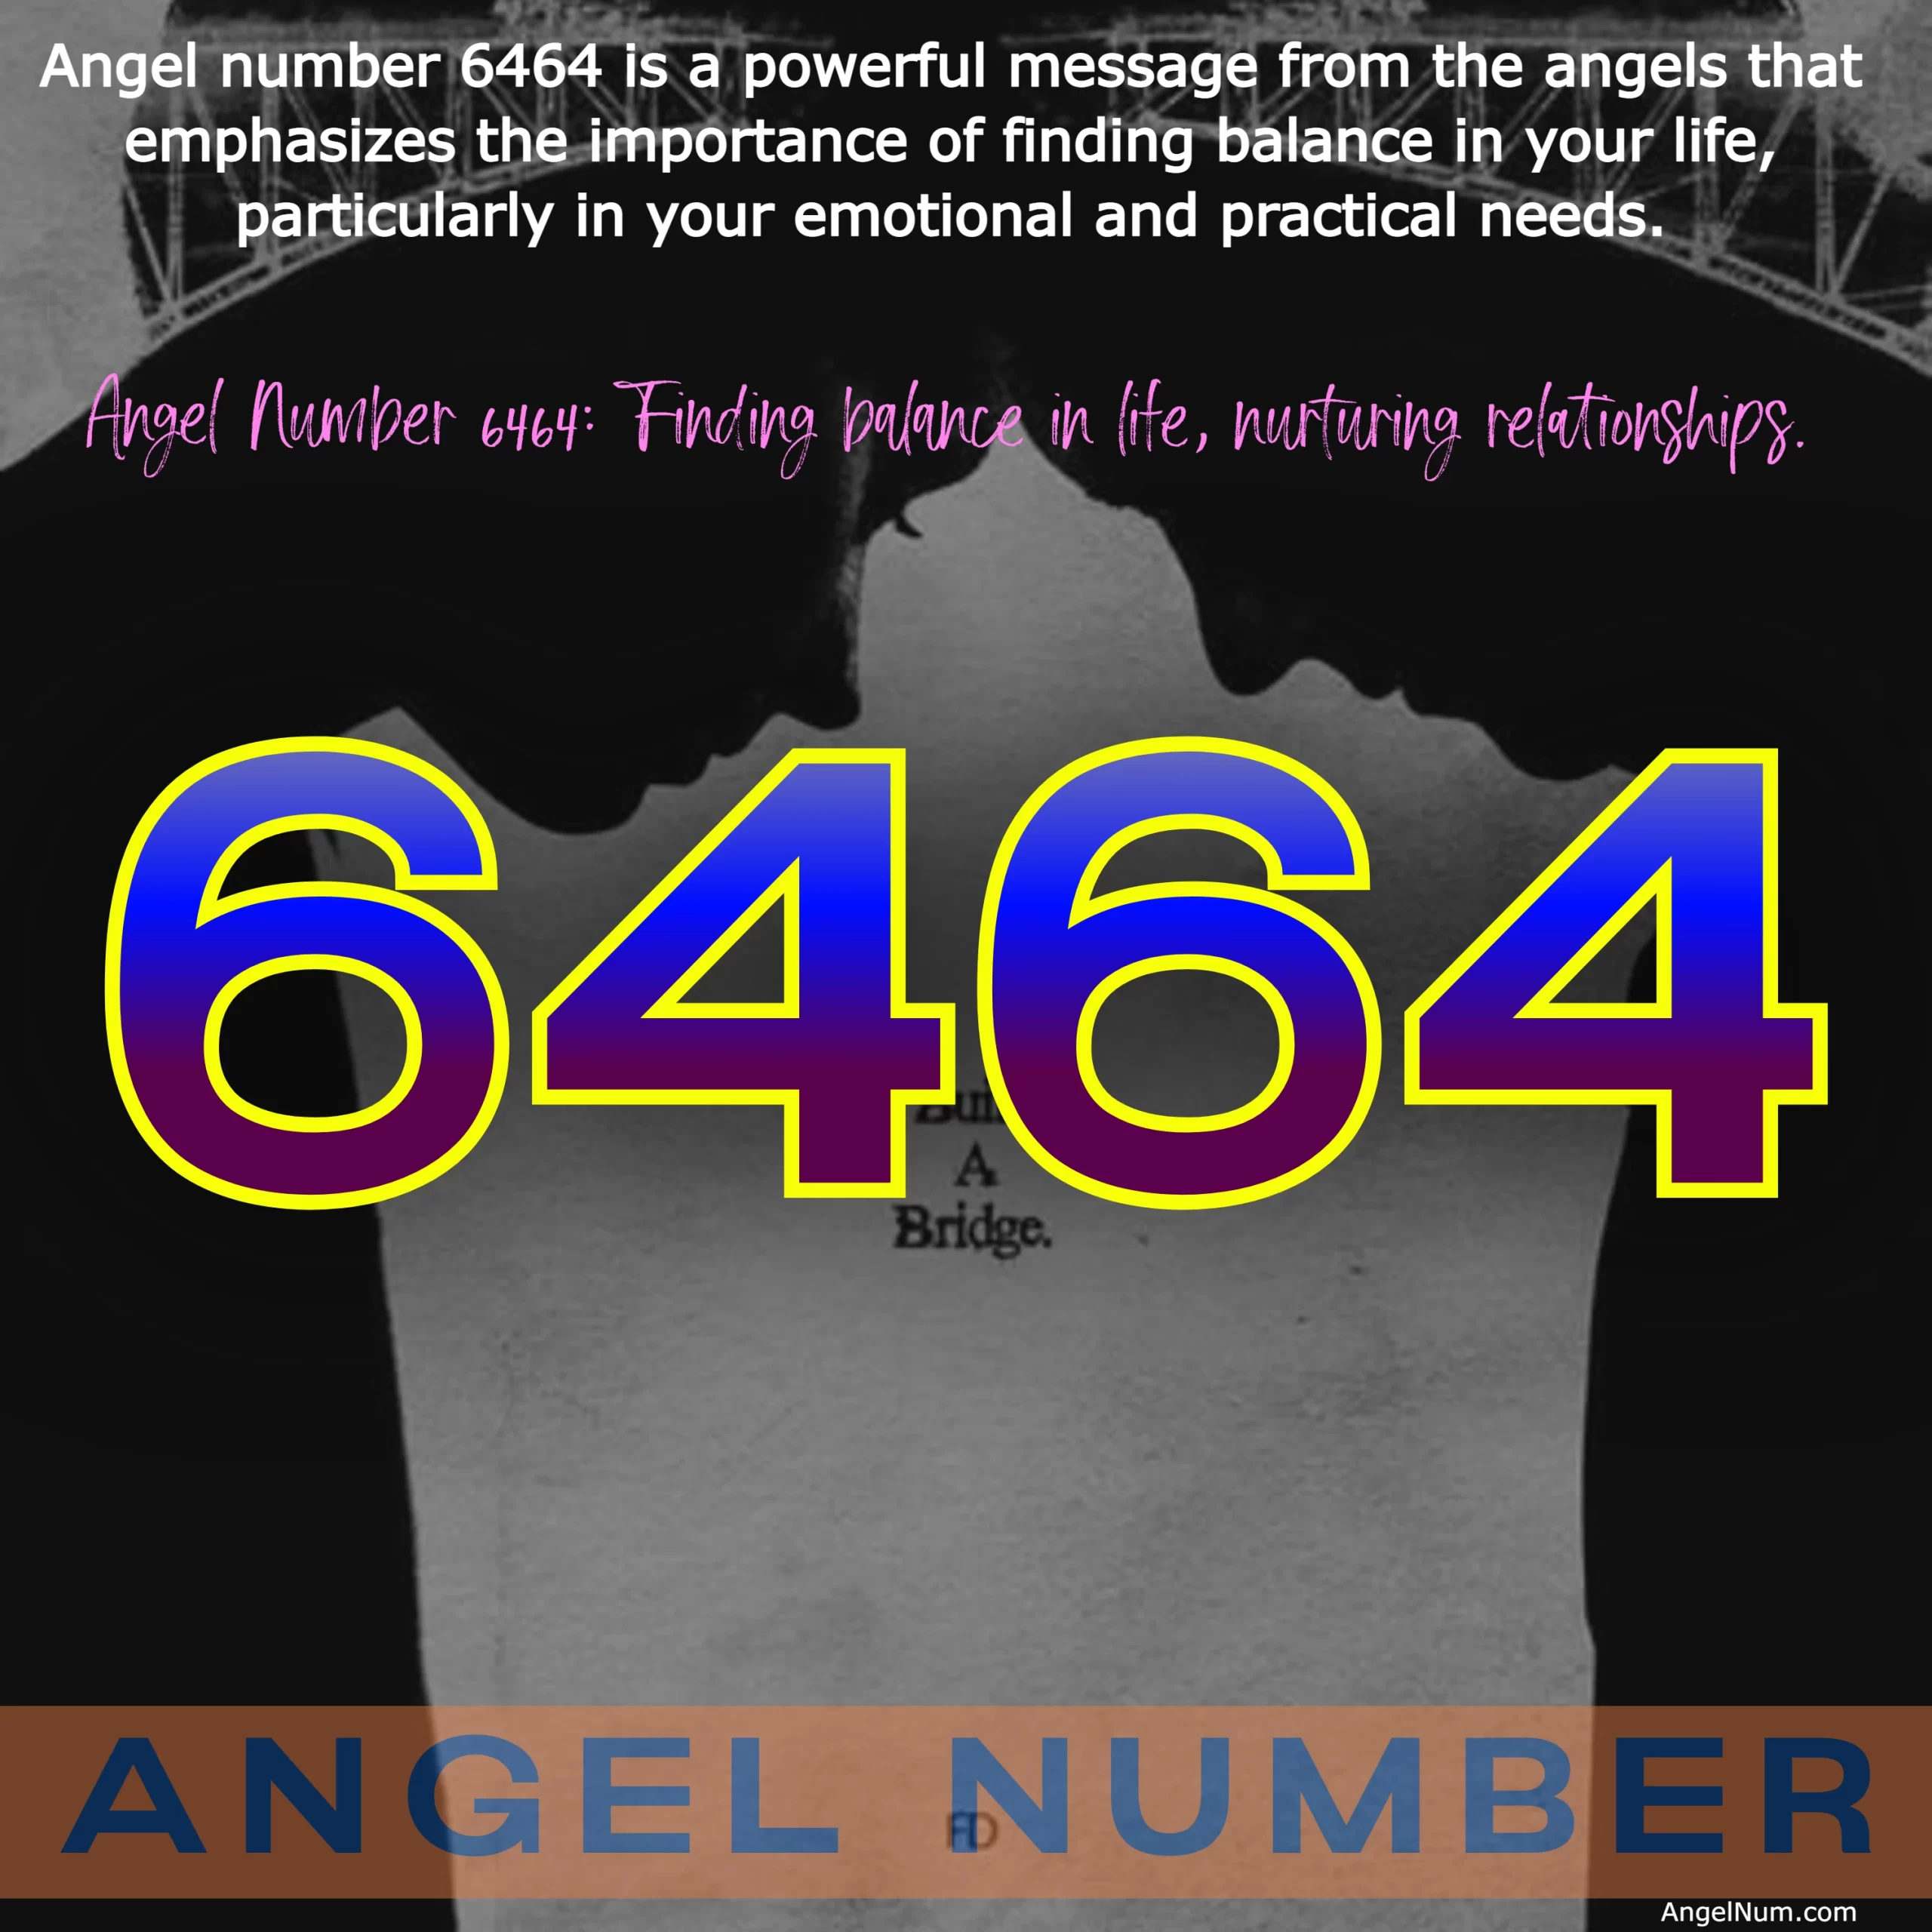 Angel Number 6464: Finding Balance and Nurturing Relationships